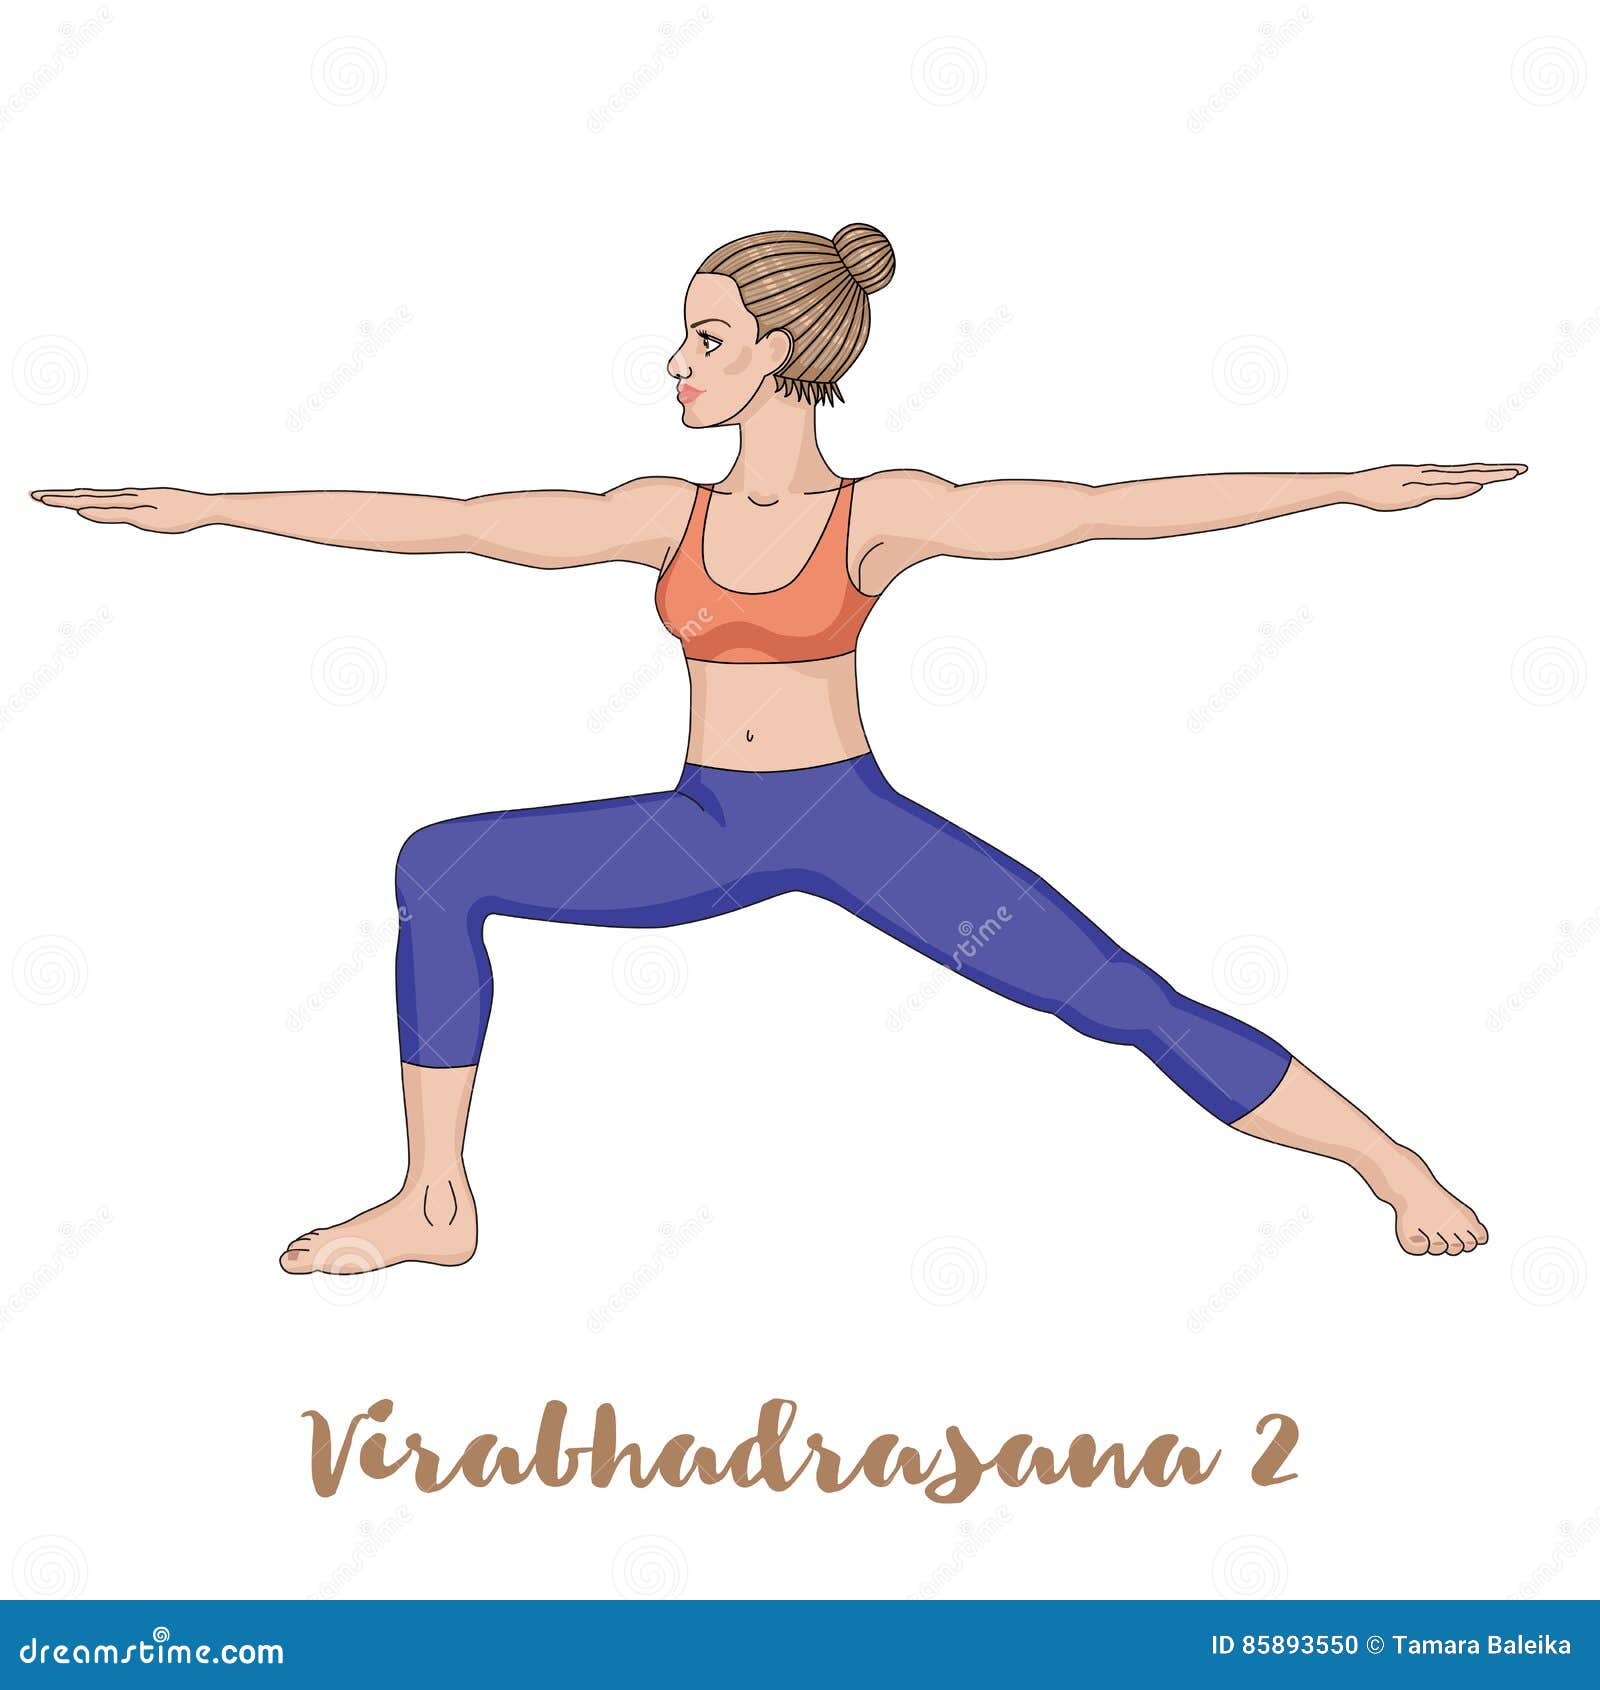 Warrior ii yoga pose silhouette #AD , #sponsored, #AD, #ii, #silhouette, # pose, #Warrior | Warrior pose yoga, Yoga poses, Yoga meditation poses